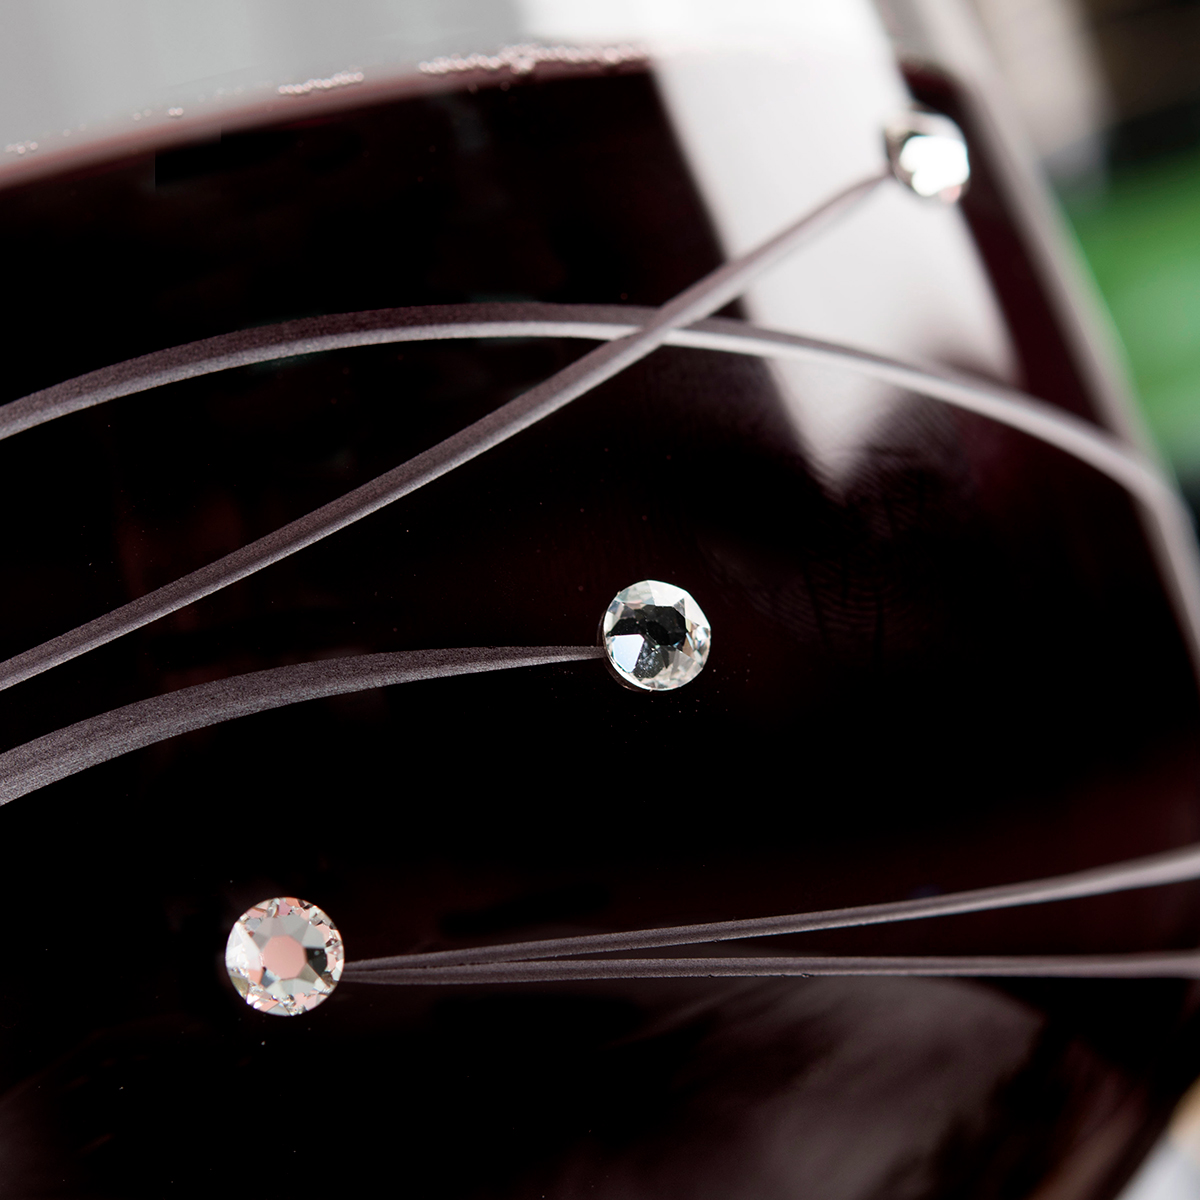 Engraved Swarovski Diamante Wine Glass - For Your Wife